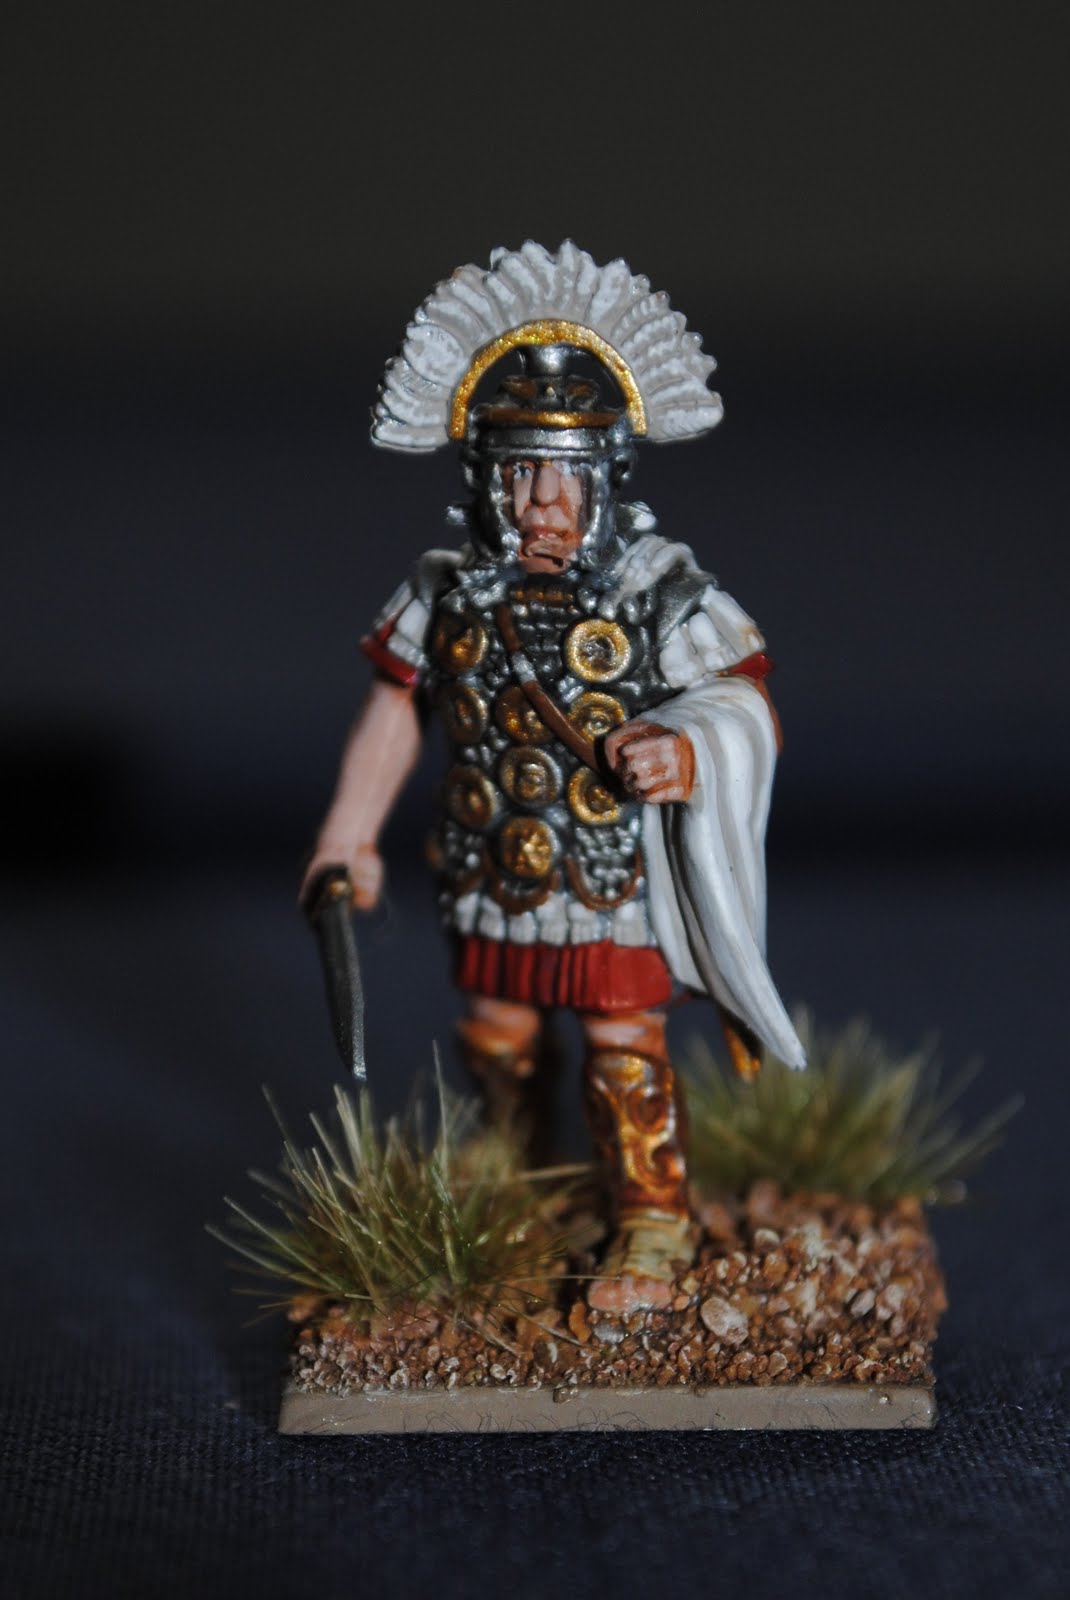 Praetorian Guard